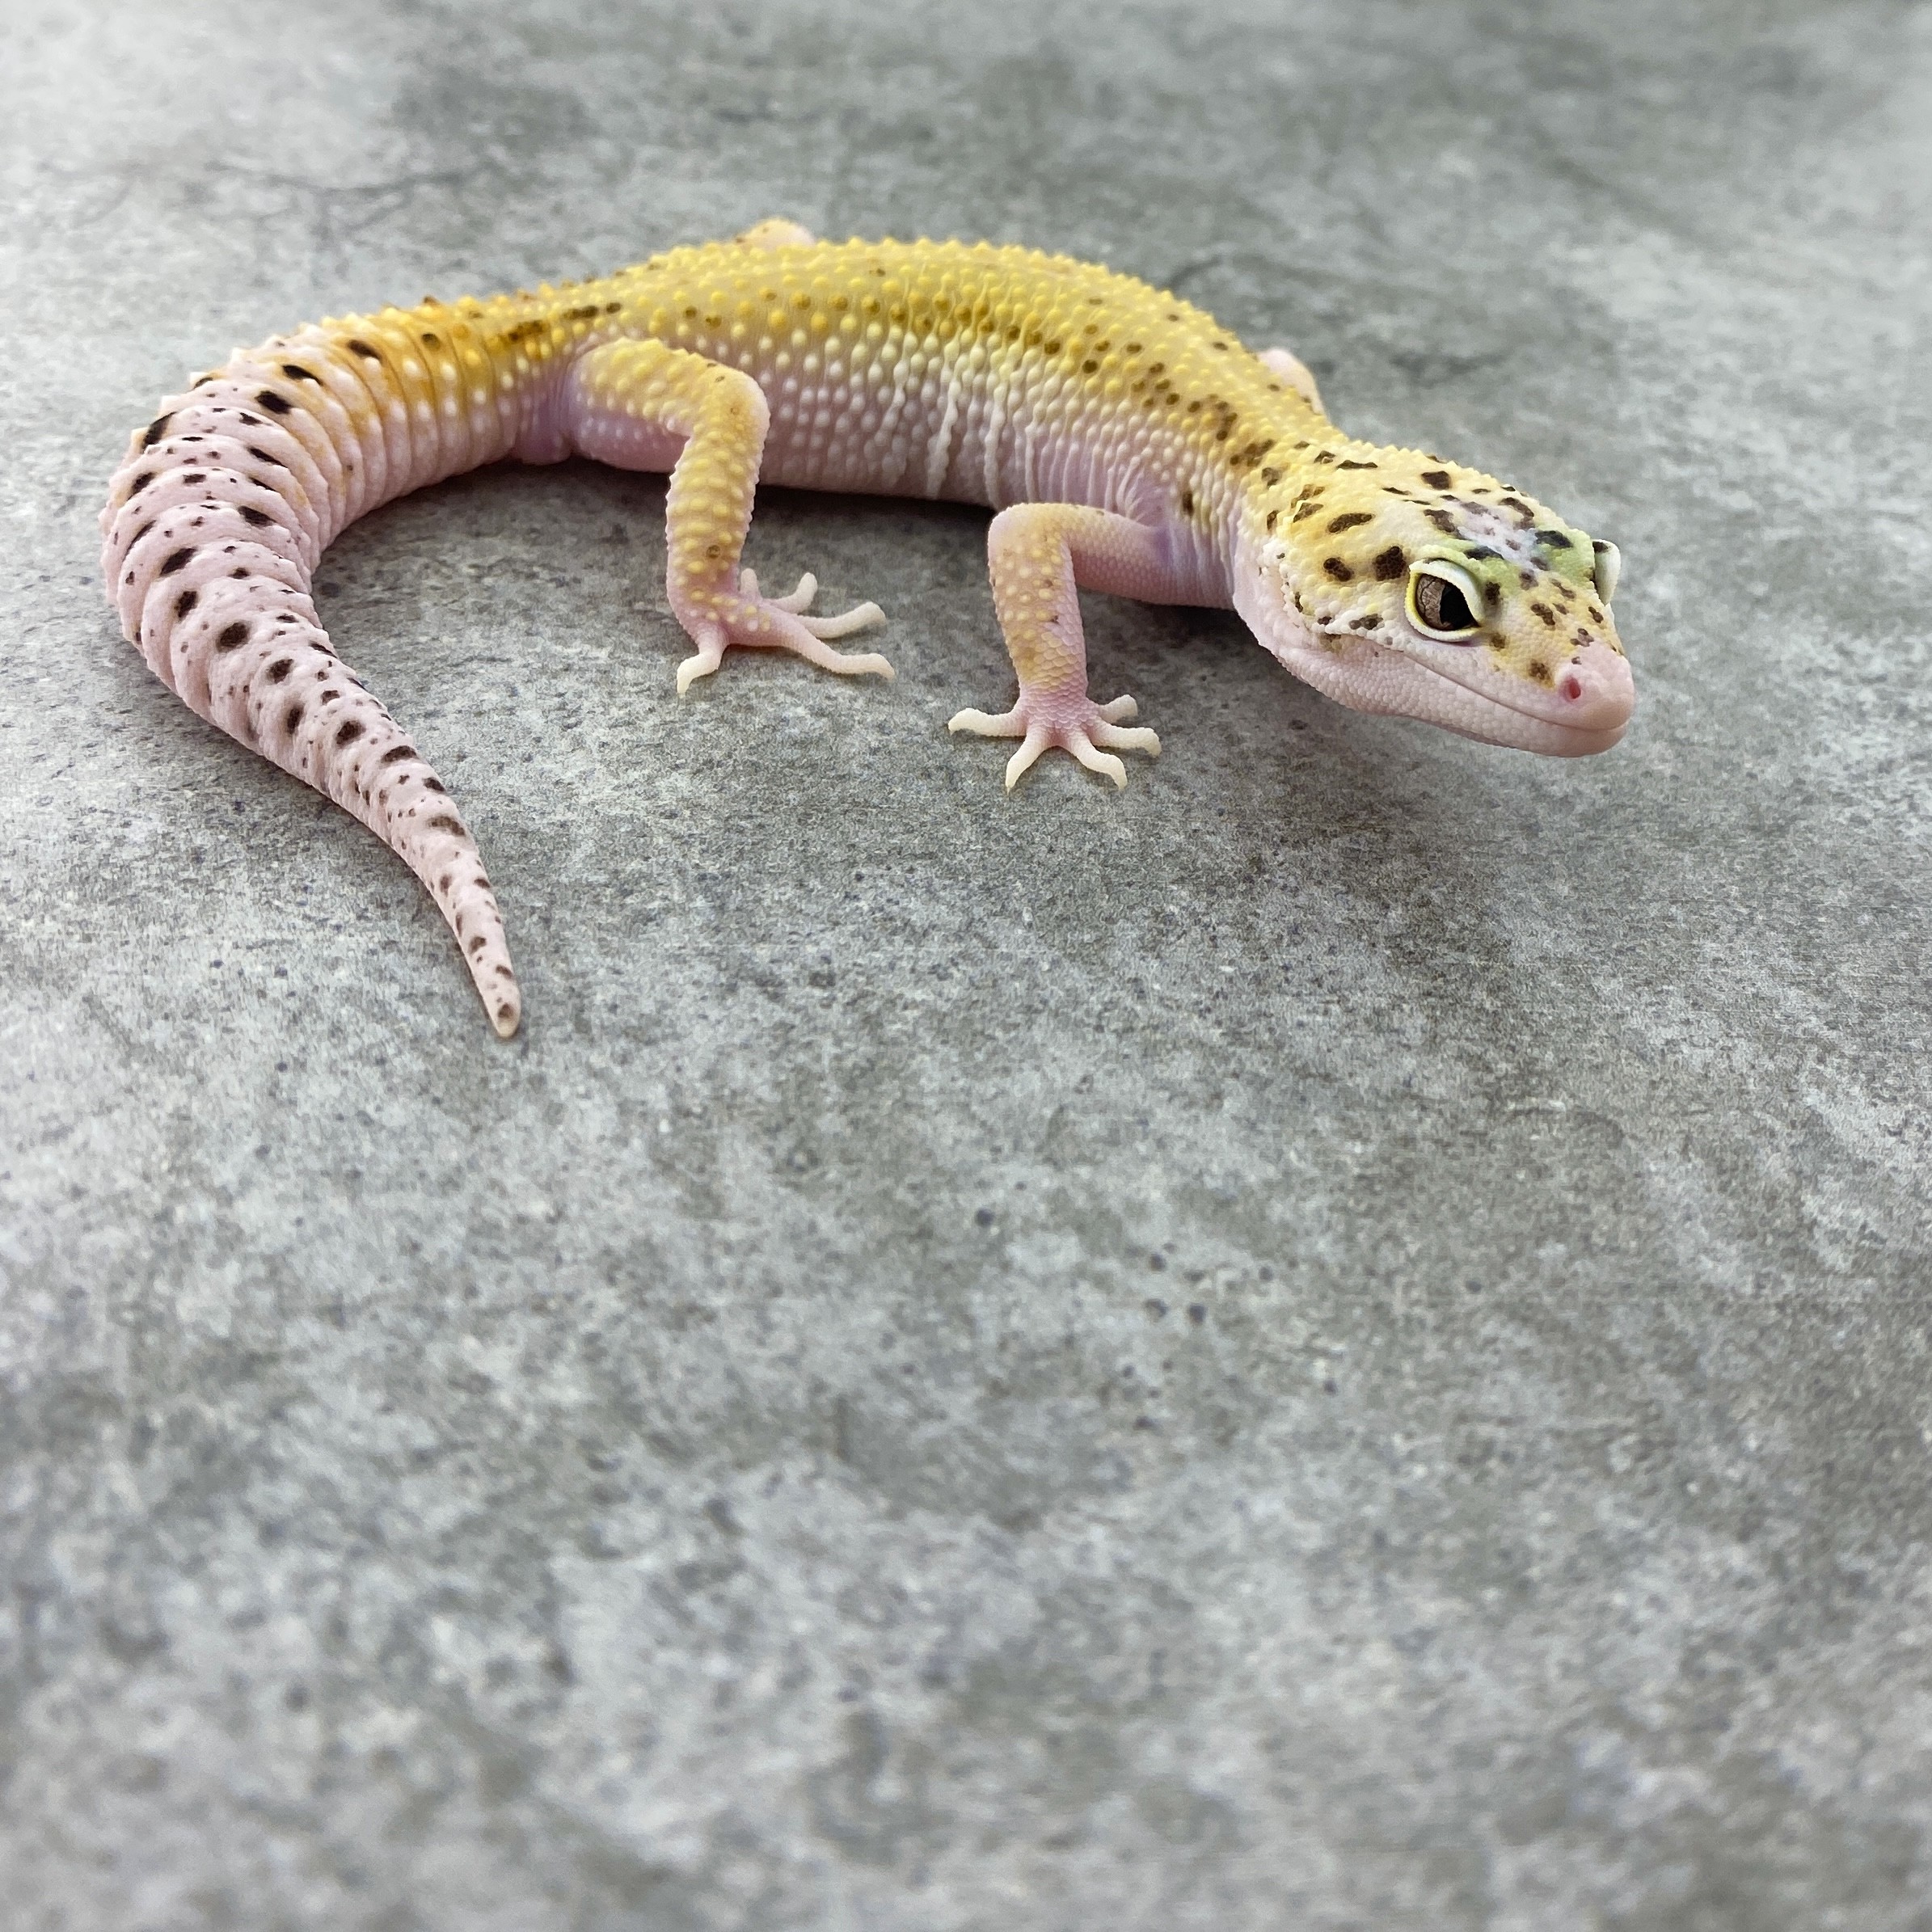 Eclipse Leopard Gecko by FuryGeckos